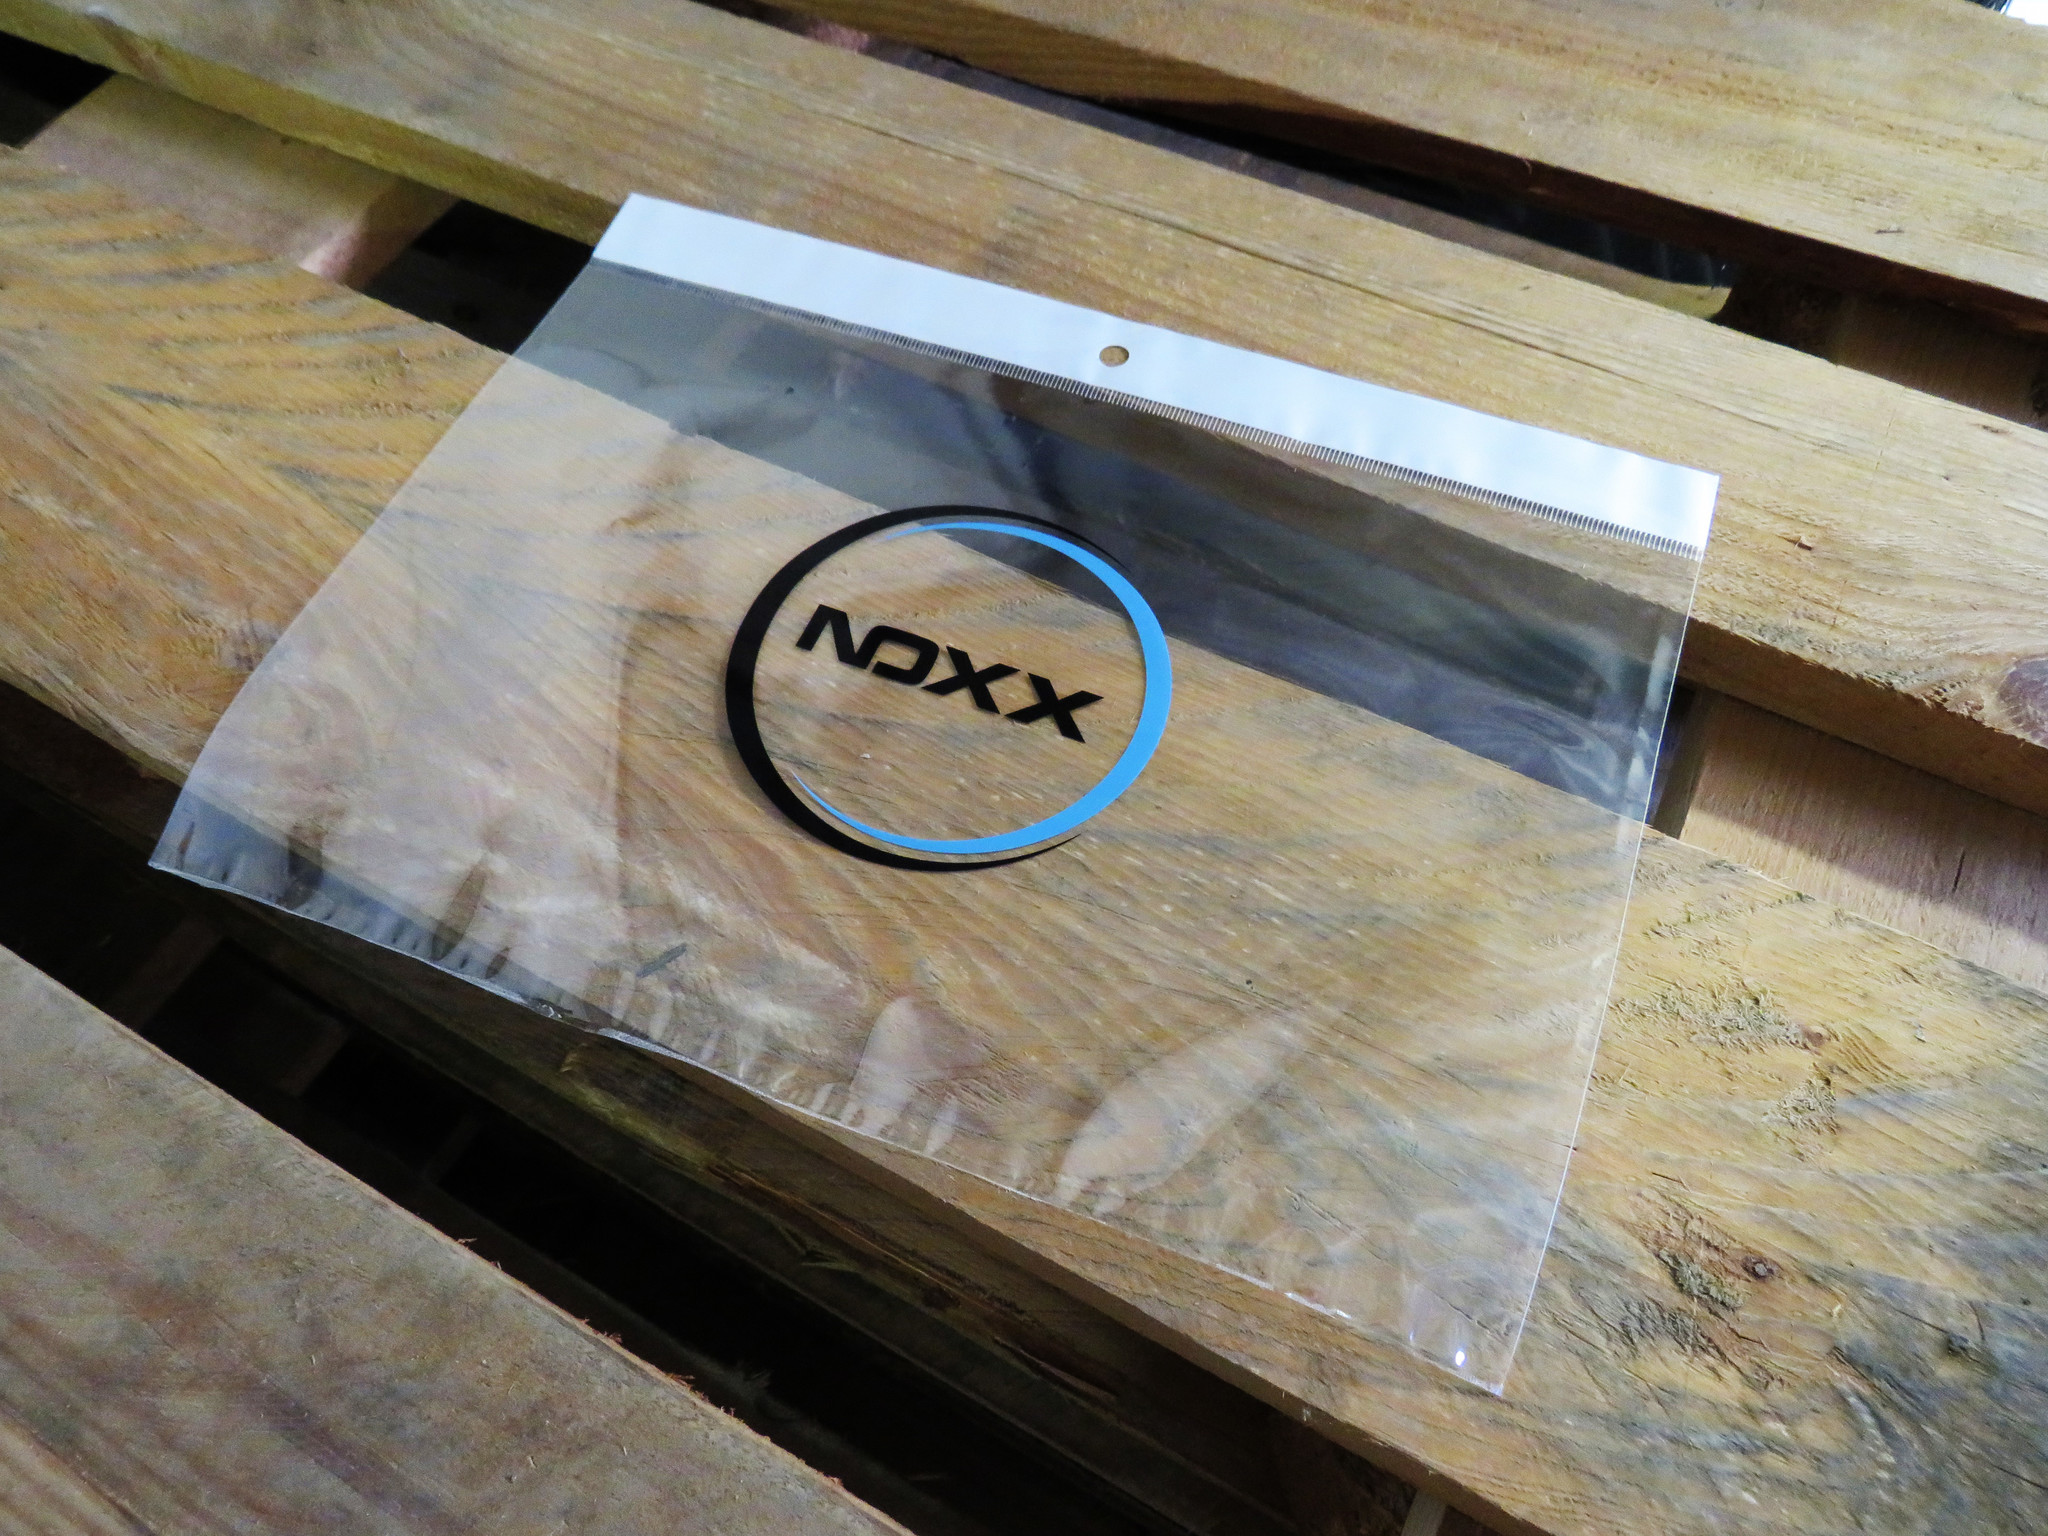 NoXx iPad Mini 6 Hoesje - Sterrenhemel